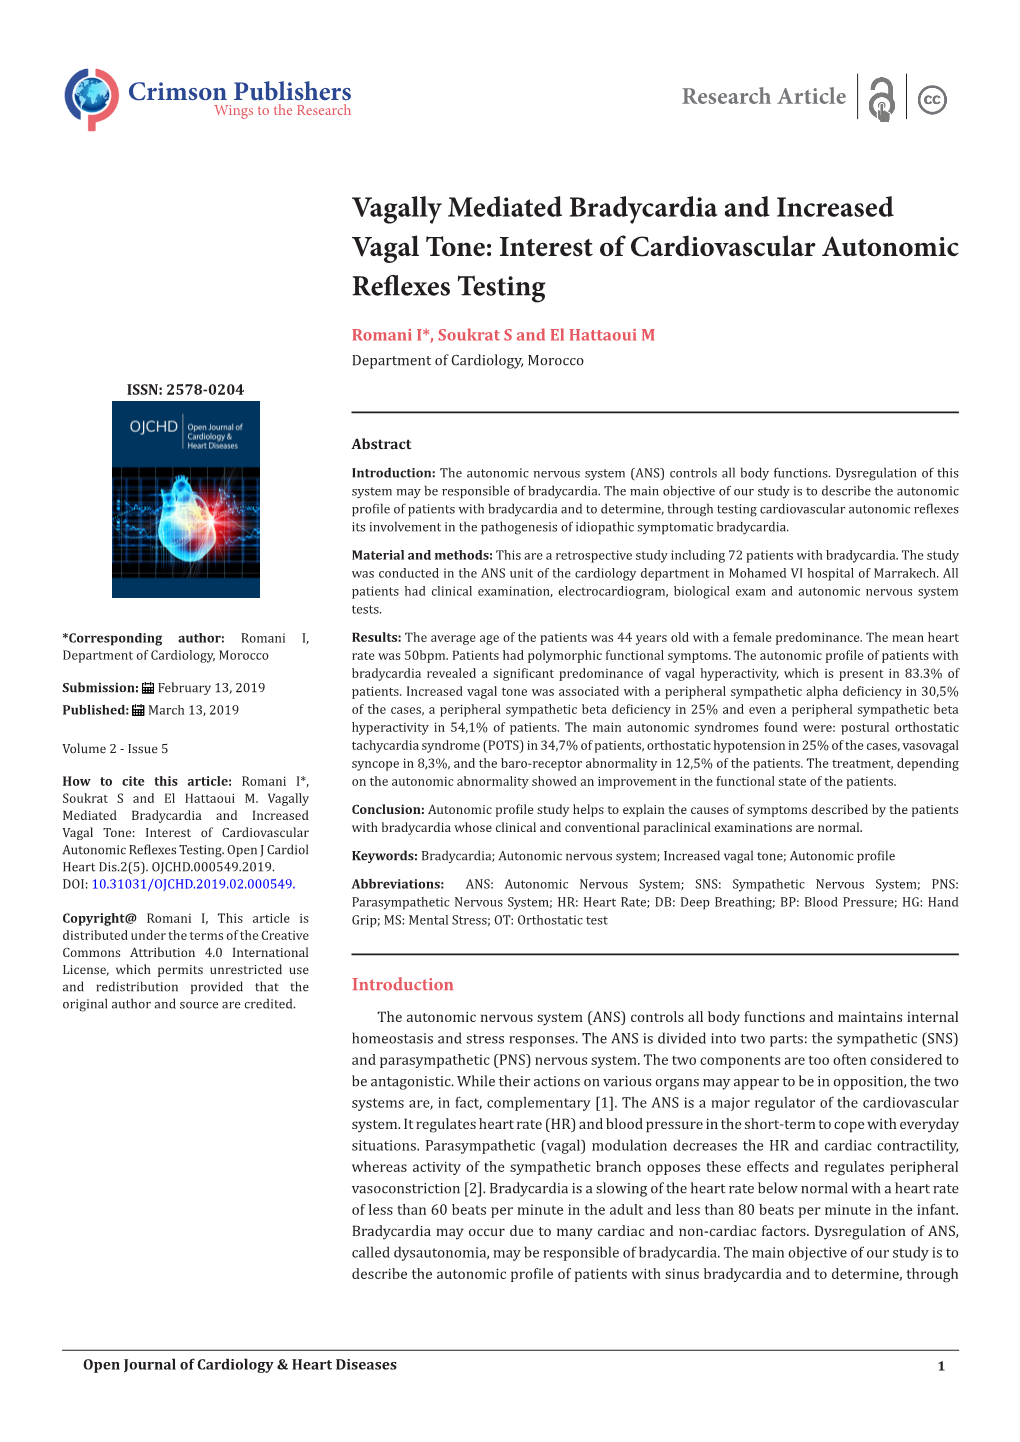 Vagally Mediated Bradycardia and Increased Vagal Tone: Interest of Cardiovascular Autonomic Reflexes Testing